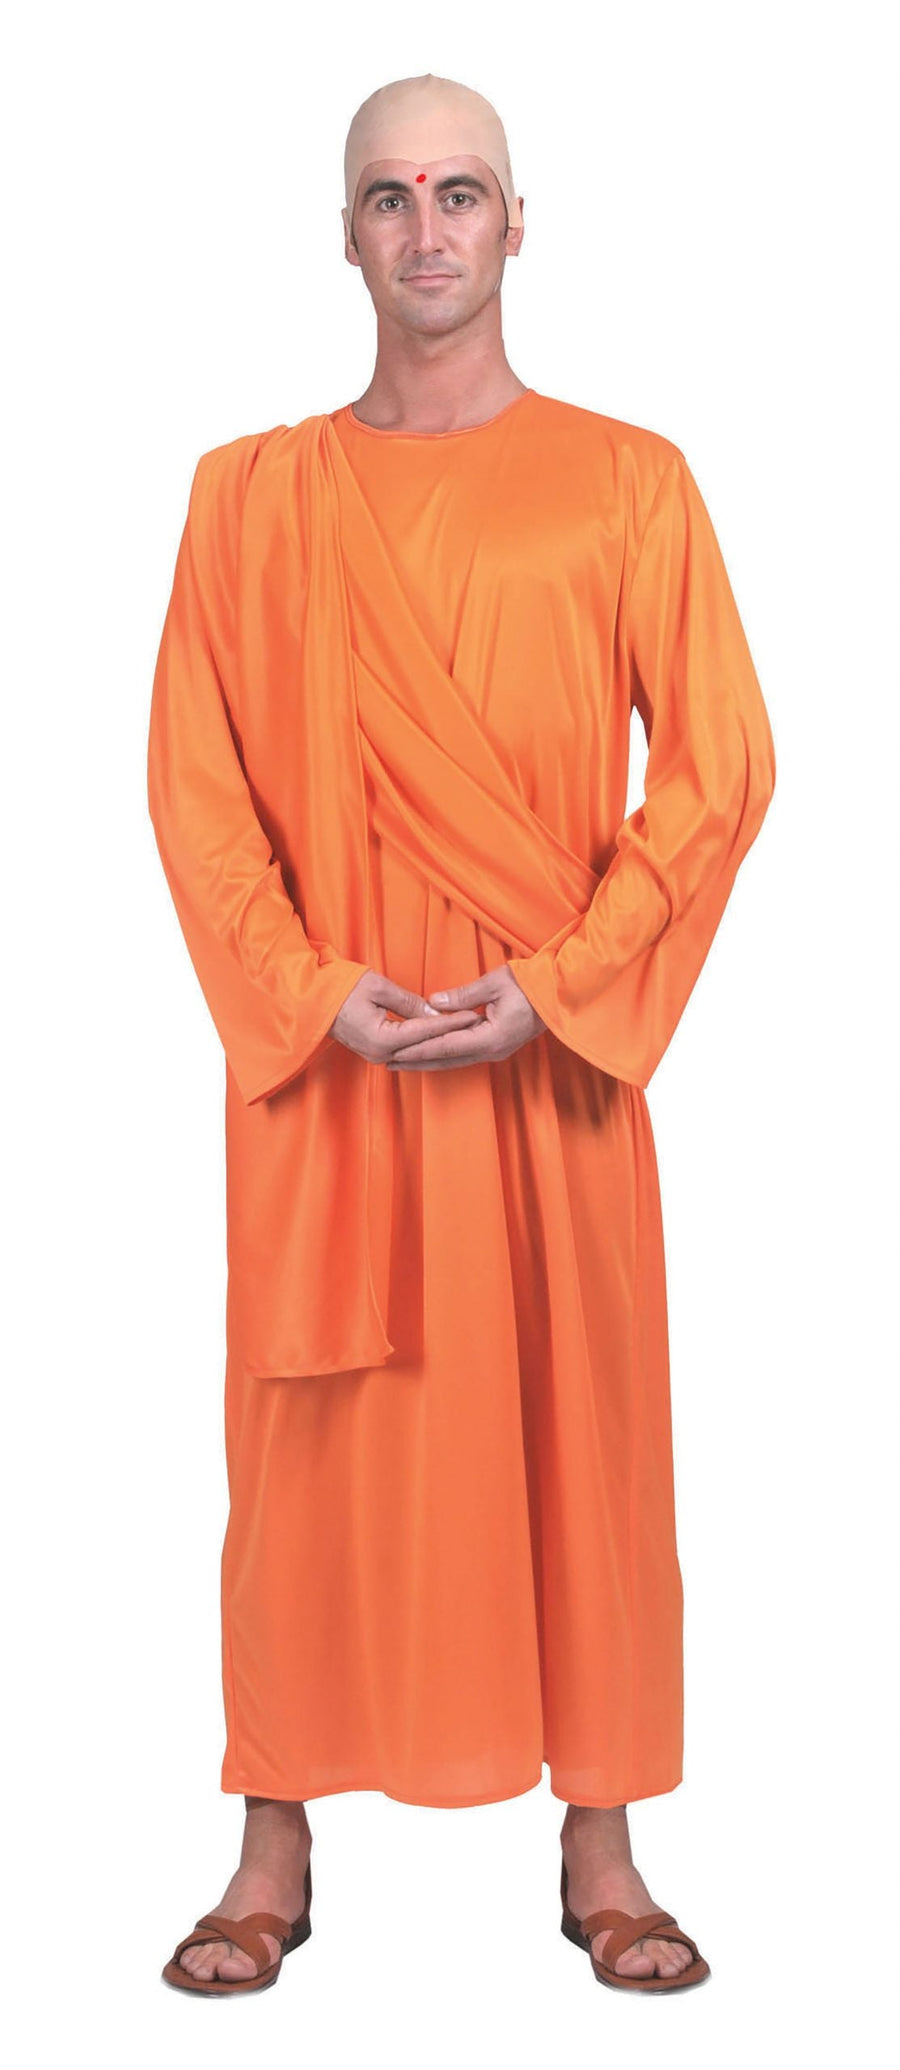 Hare Krishna Costume Male Orange Monk Robes_1